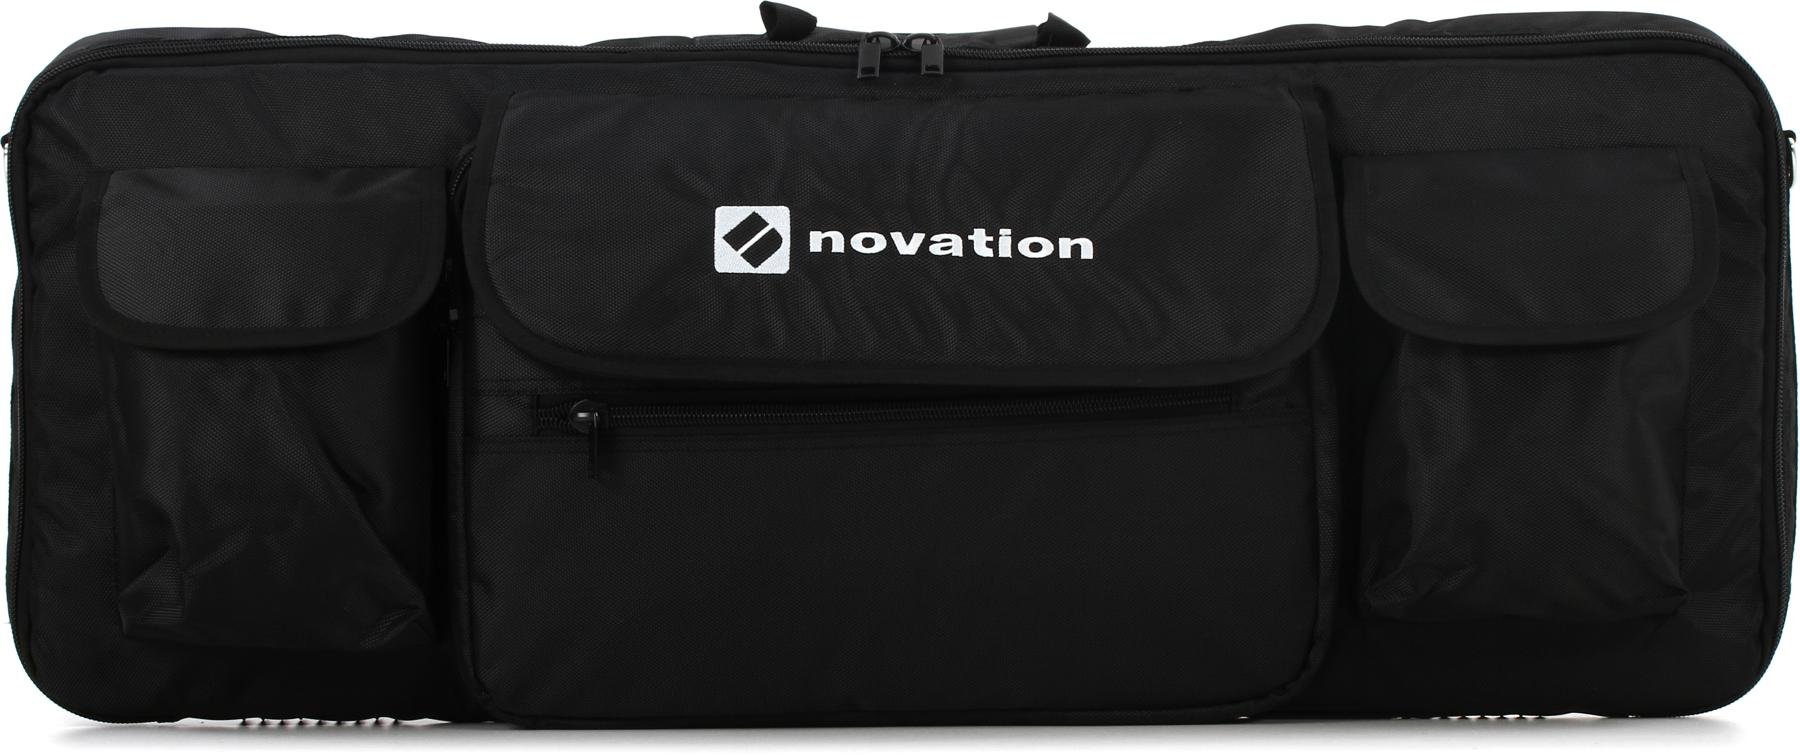 Novation Gig Bag 49 for SLmkII and Impulse 49 85x33x10 cm 